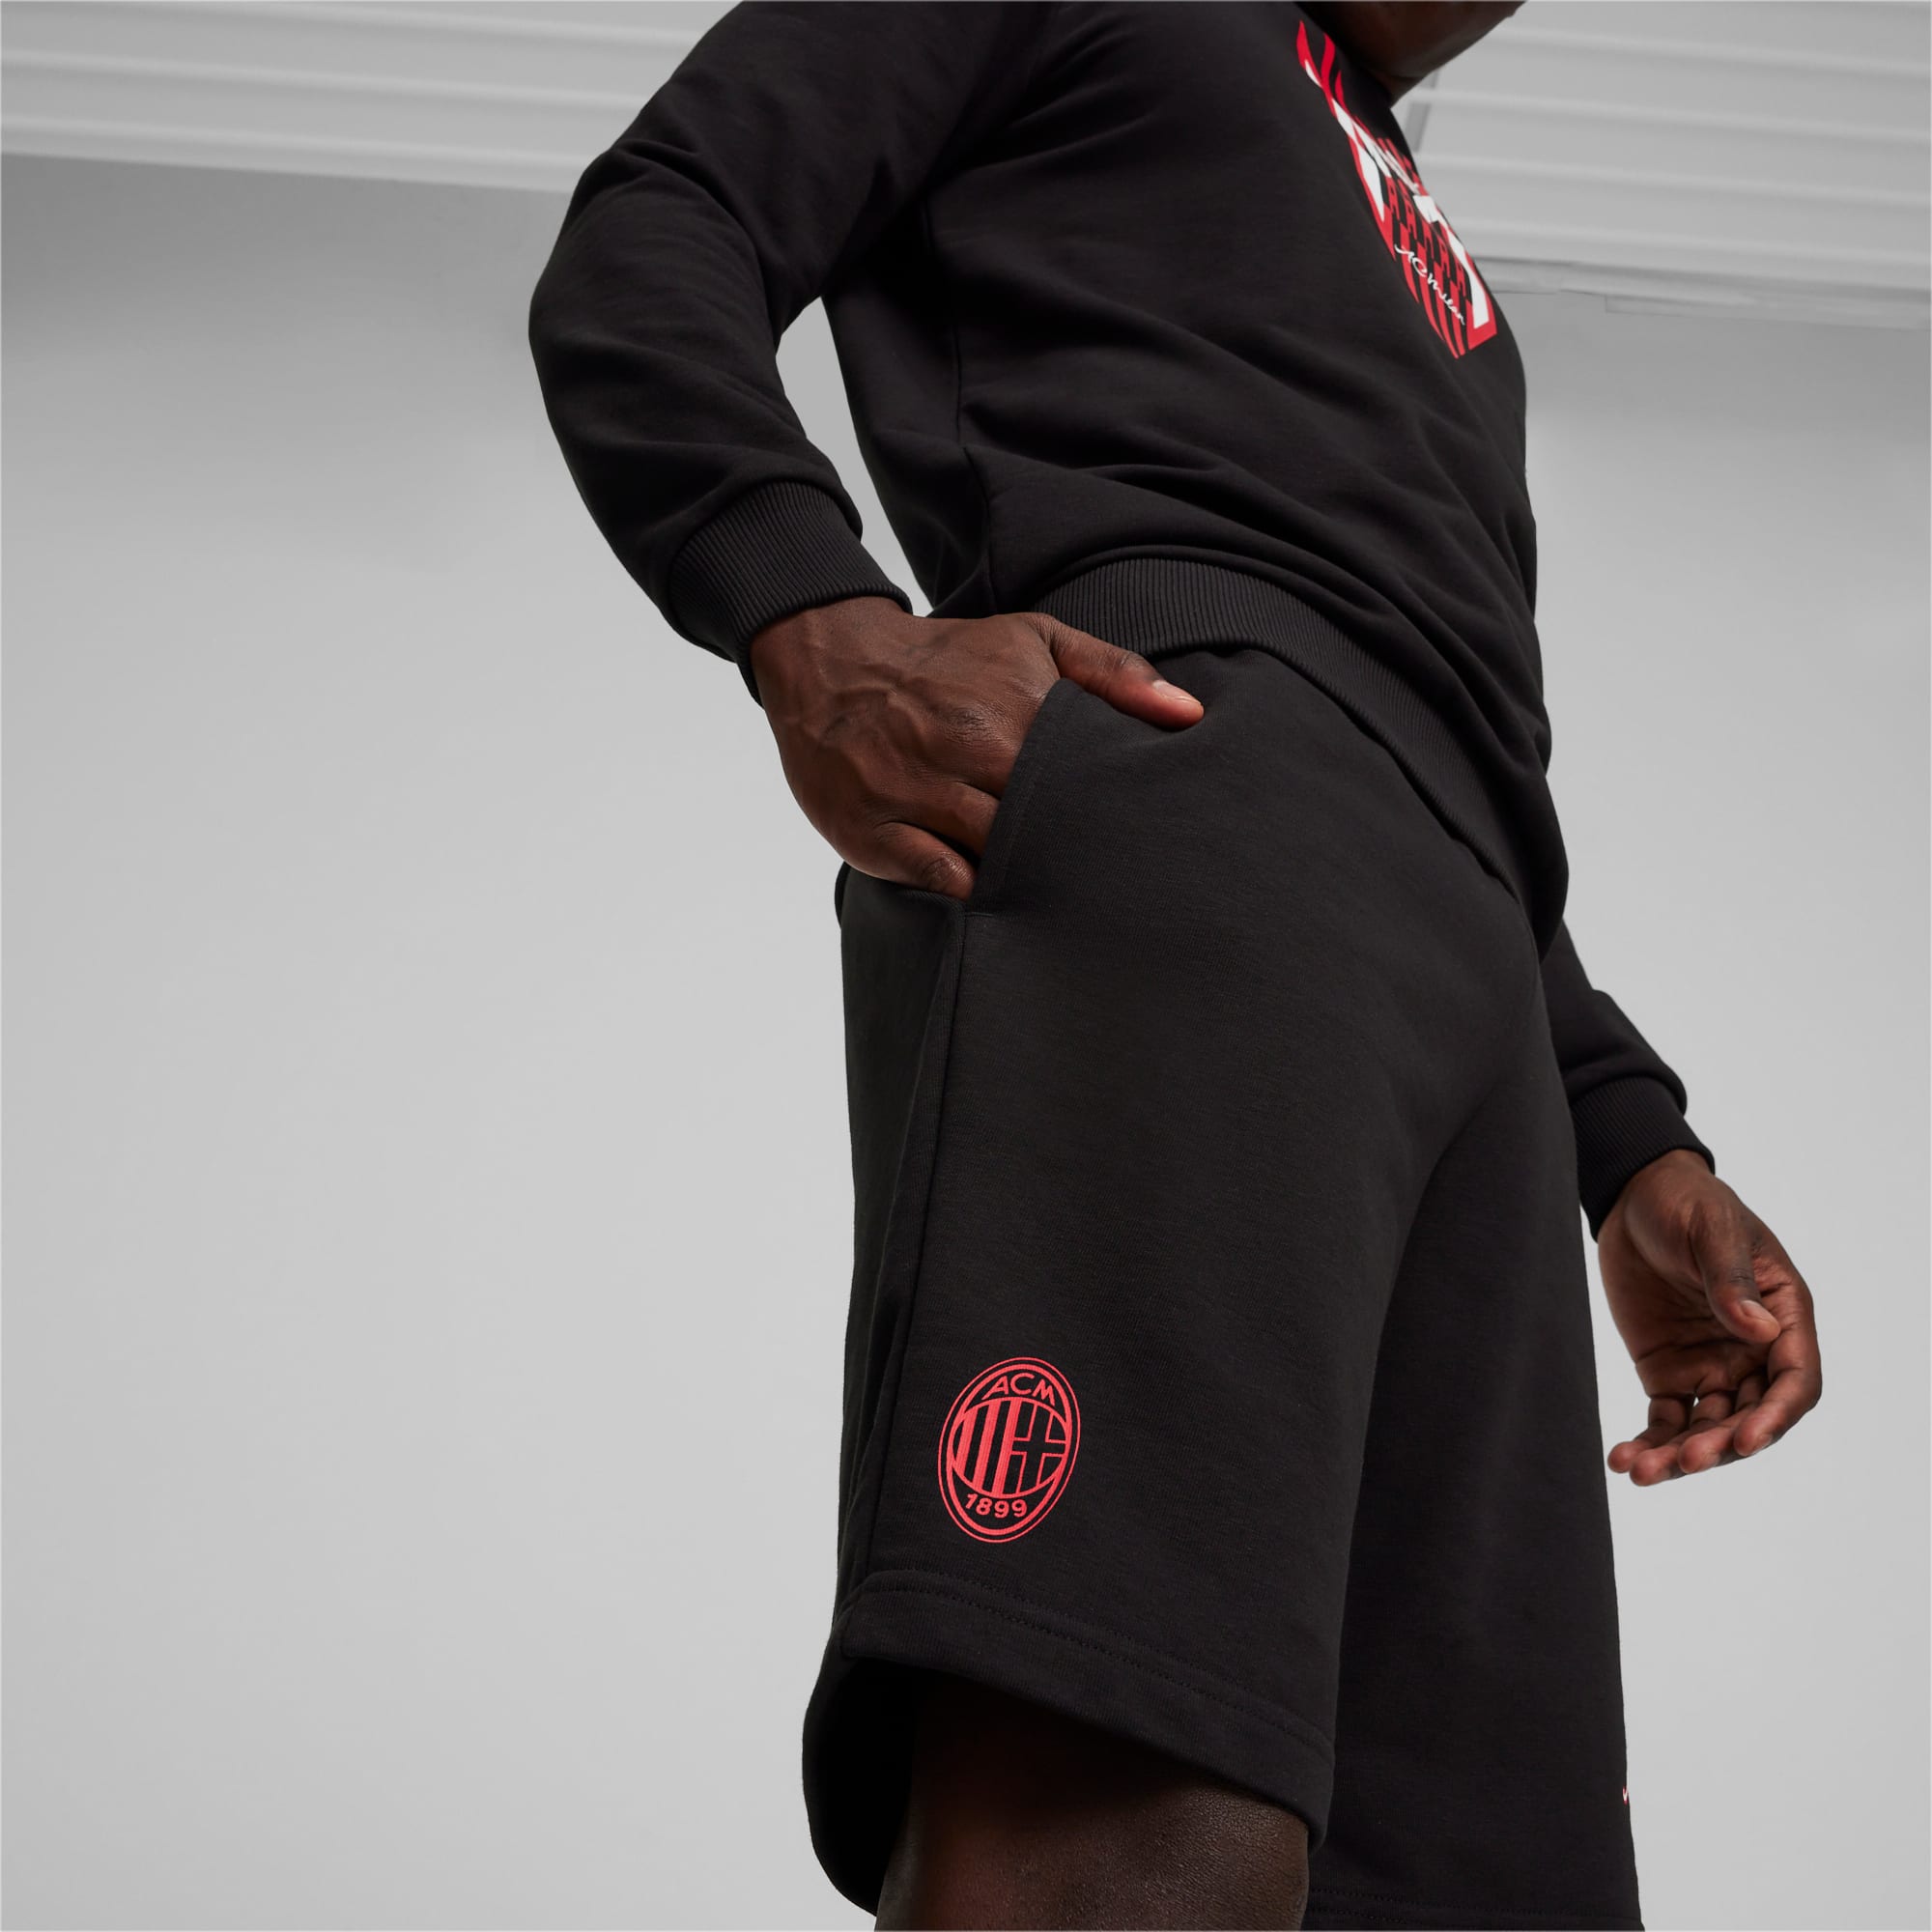 Men's PUMA AC Milan Ftblicons Shorts, Black